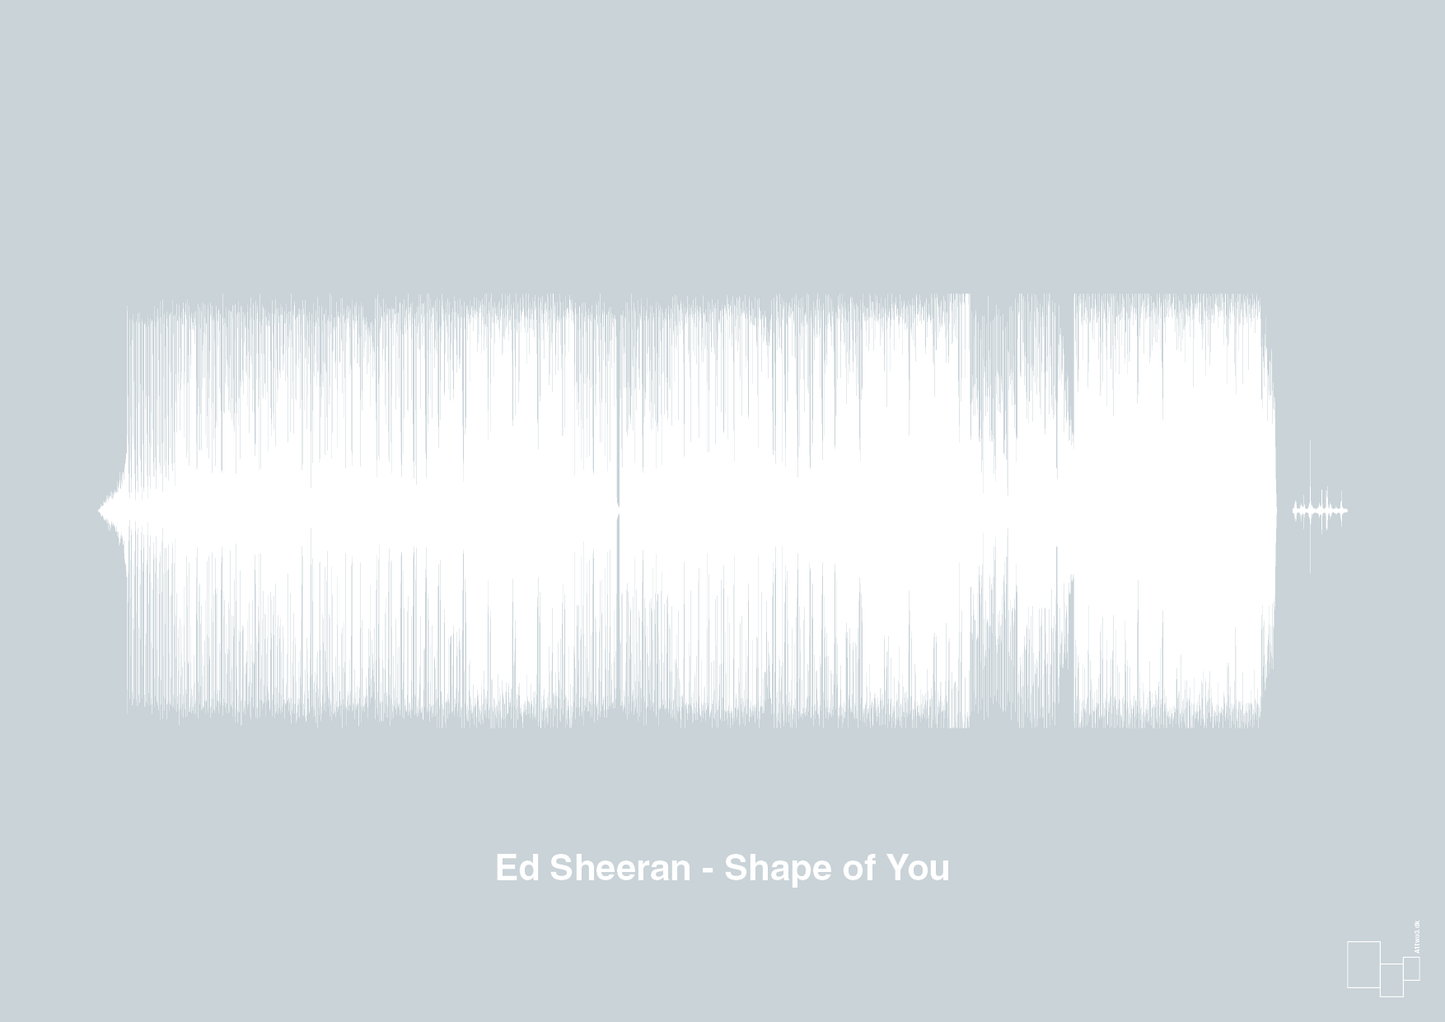 ed sheeran - shape of you - Plakat med Musik i Light Drizzle